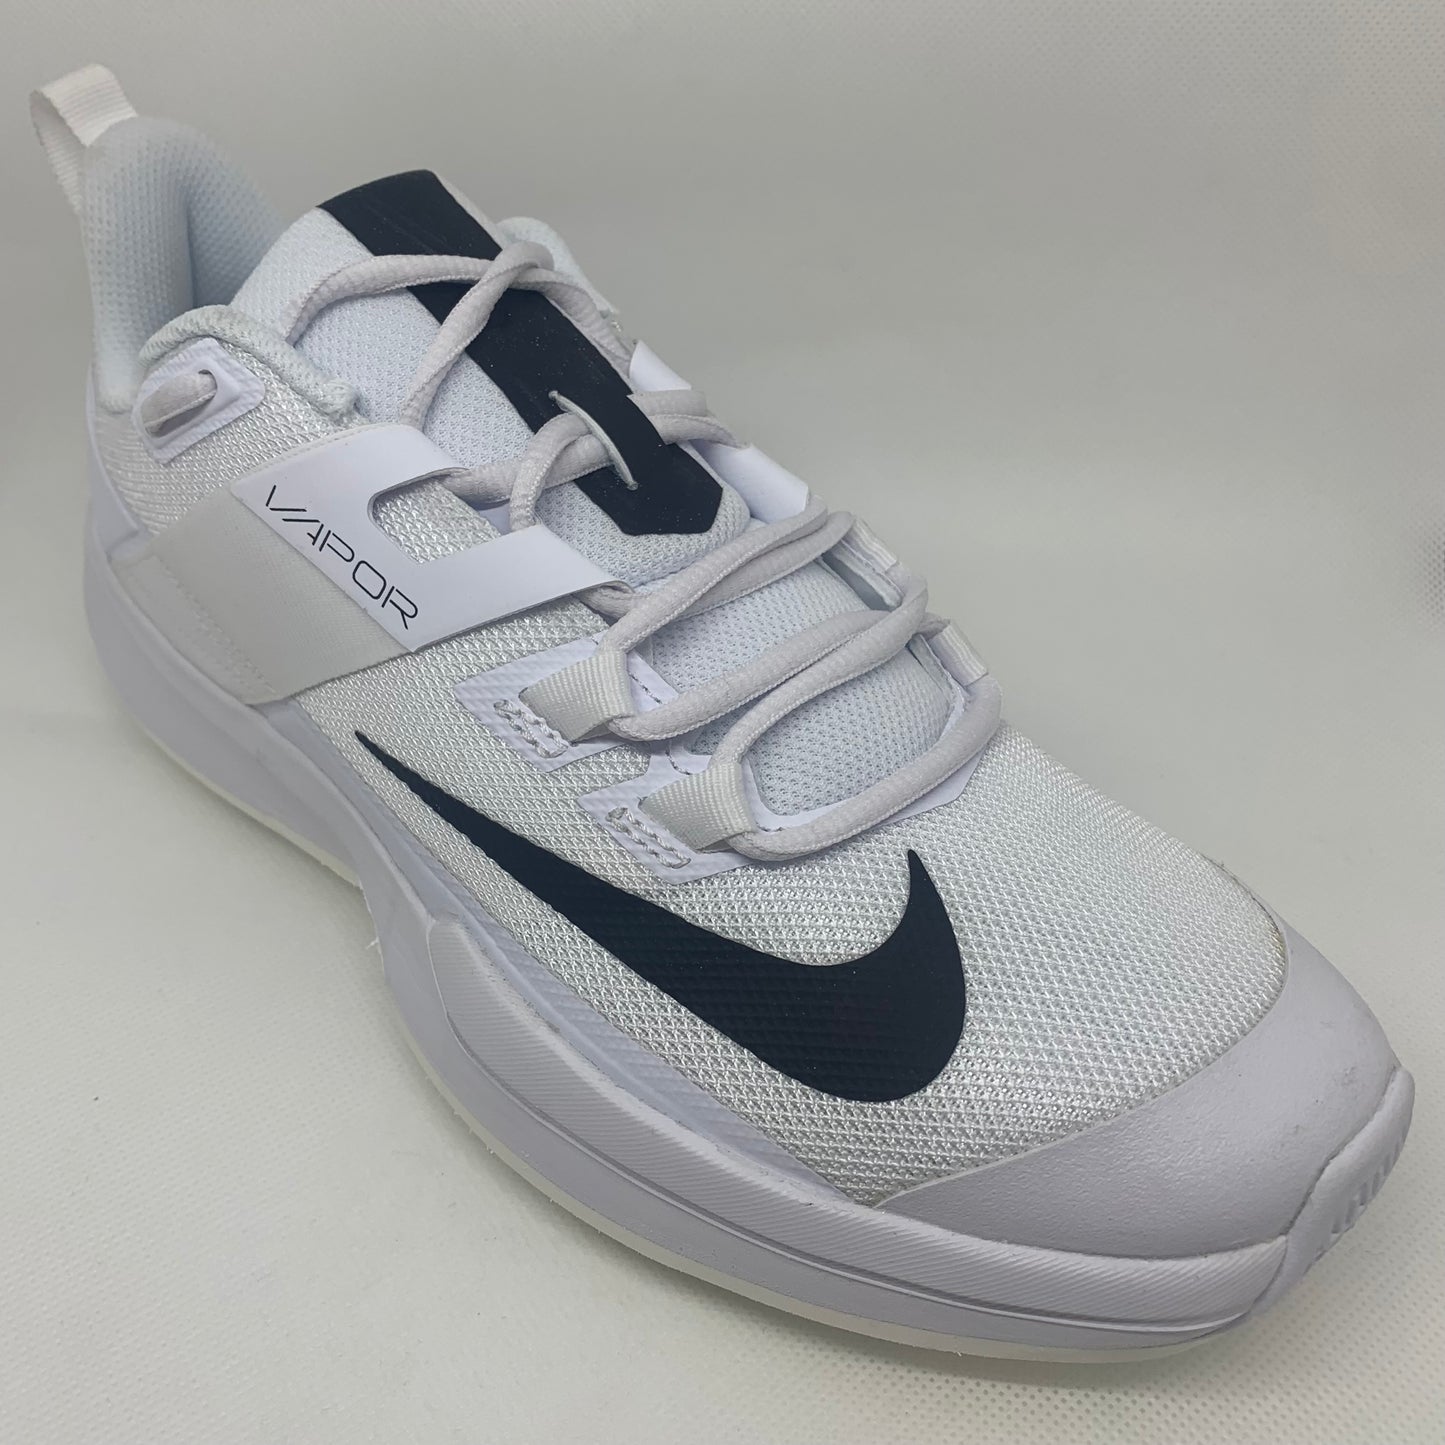 Pre-Spiked Nike Vapor Lite Men's Hard Court Tennis Cricket Shoes